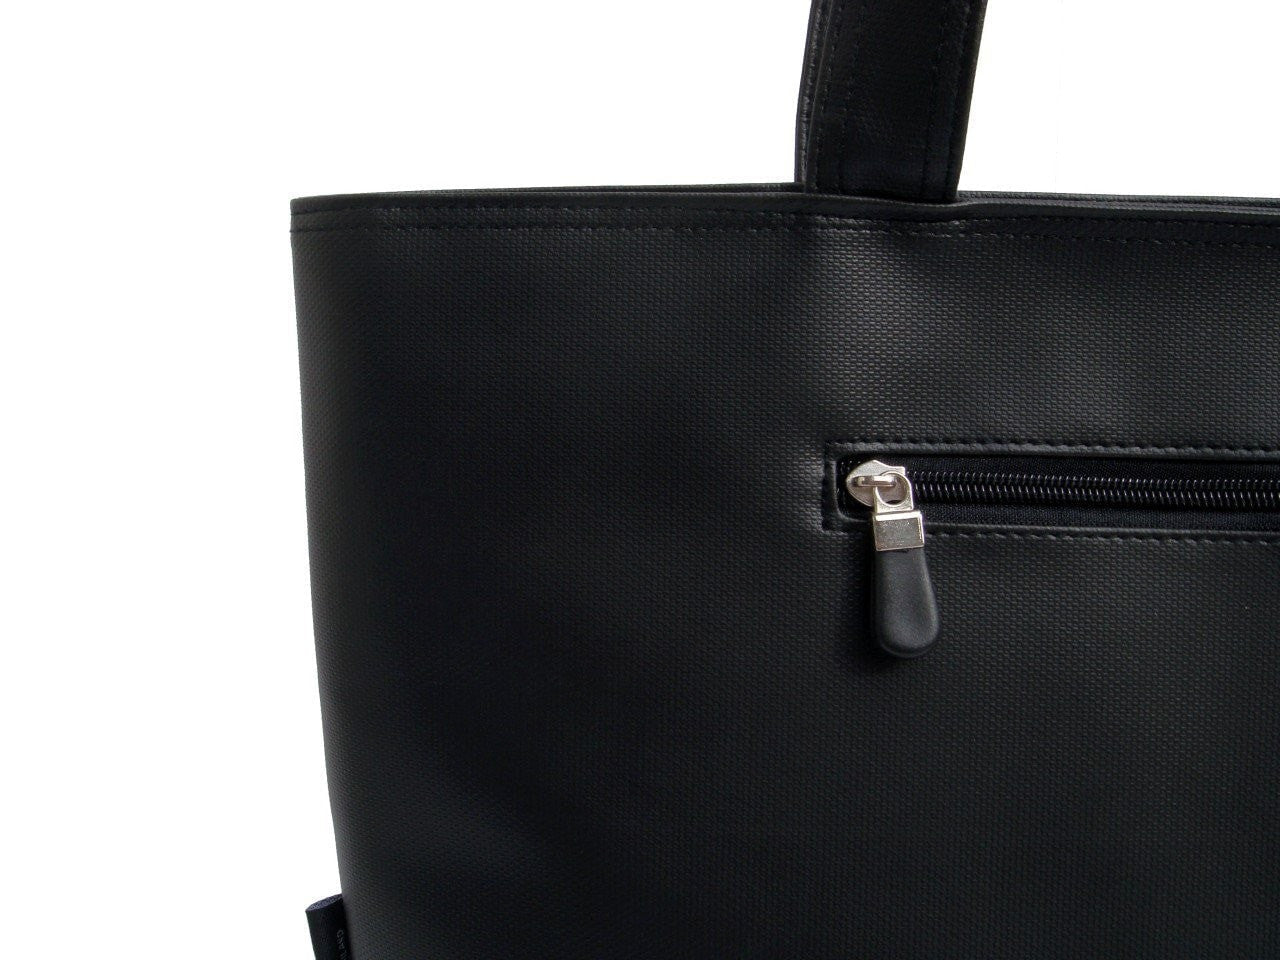 Audrey Hepburn Signature Fashion Wide Tote Shoulder Bag Purse